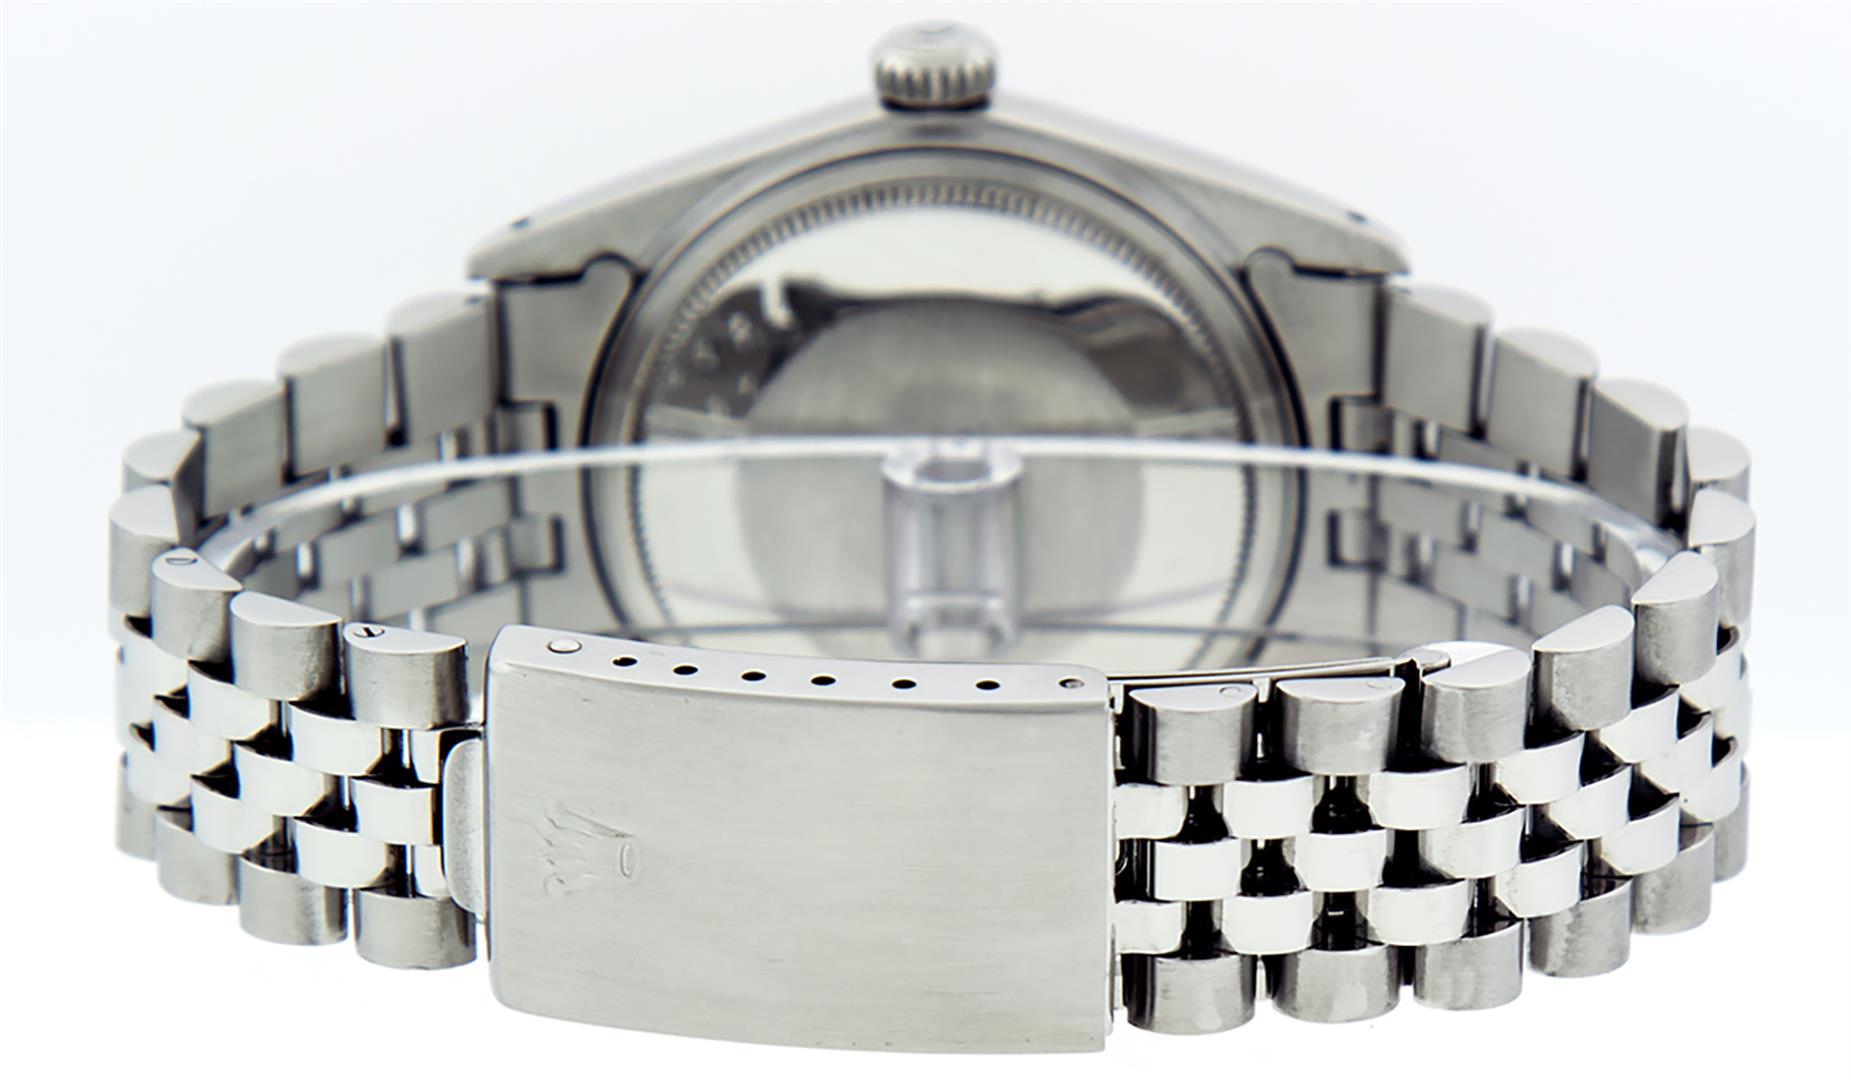 Rolex Mens Stainless Steel Purple Diamond 36MM Datejust Wristwatch